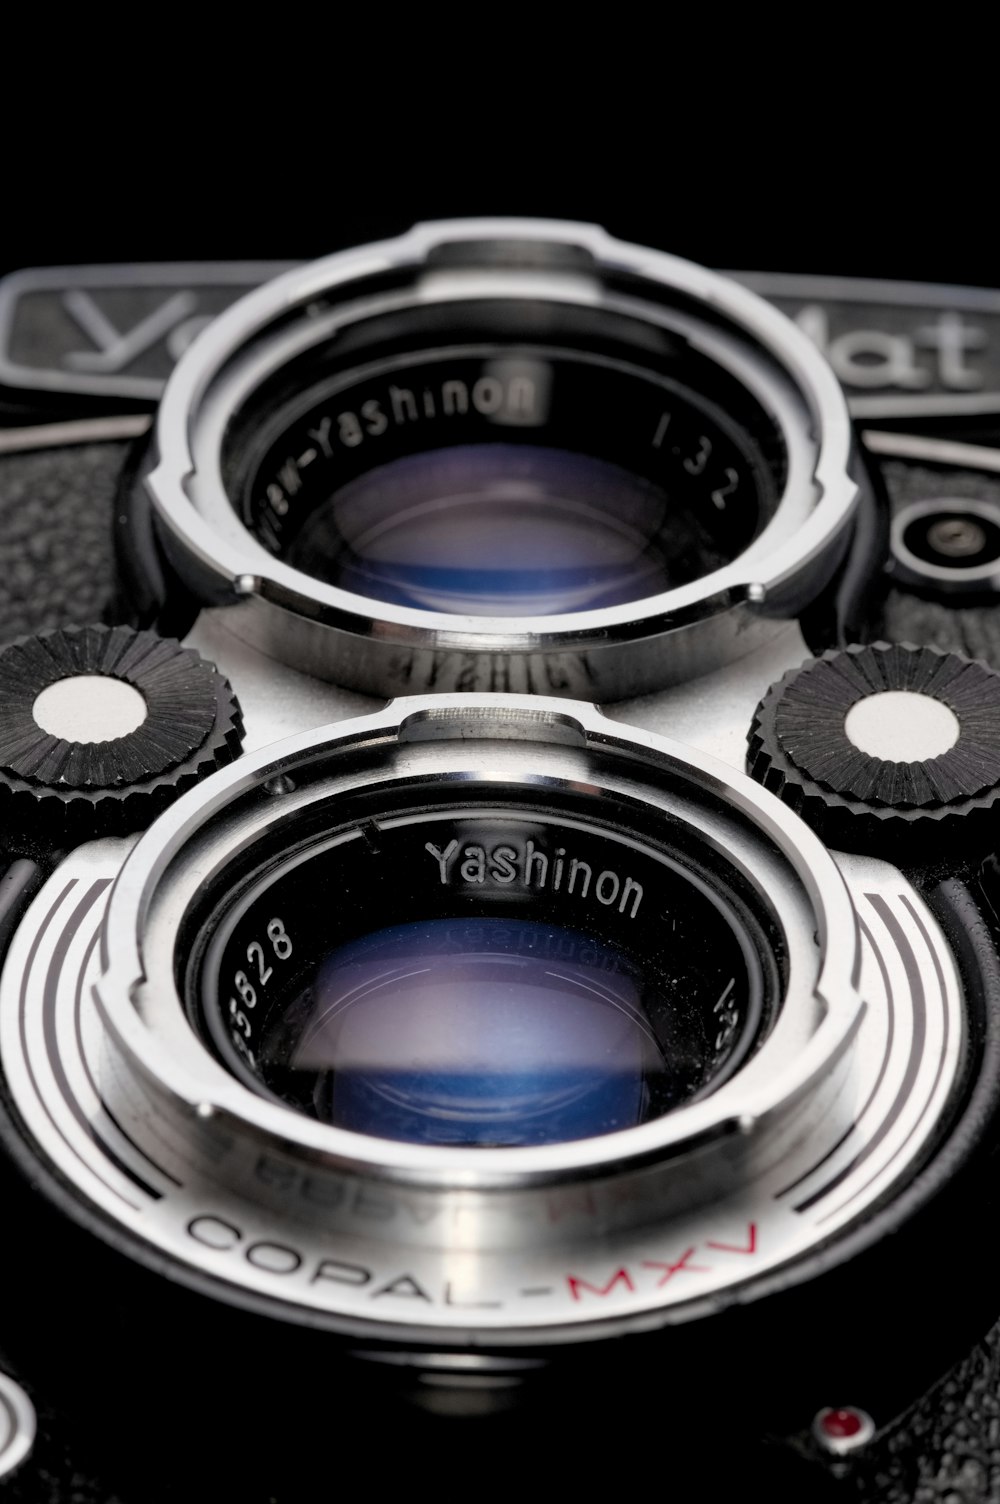 black and silver dslr camera lens